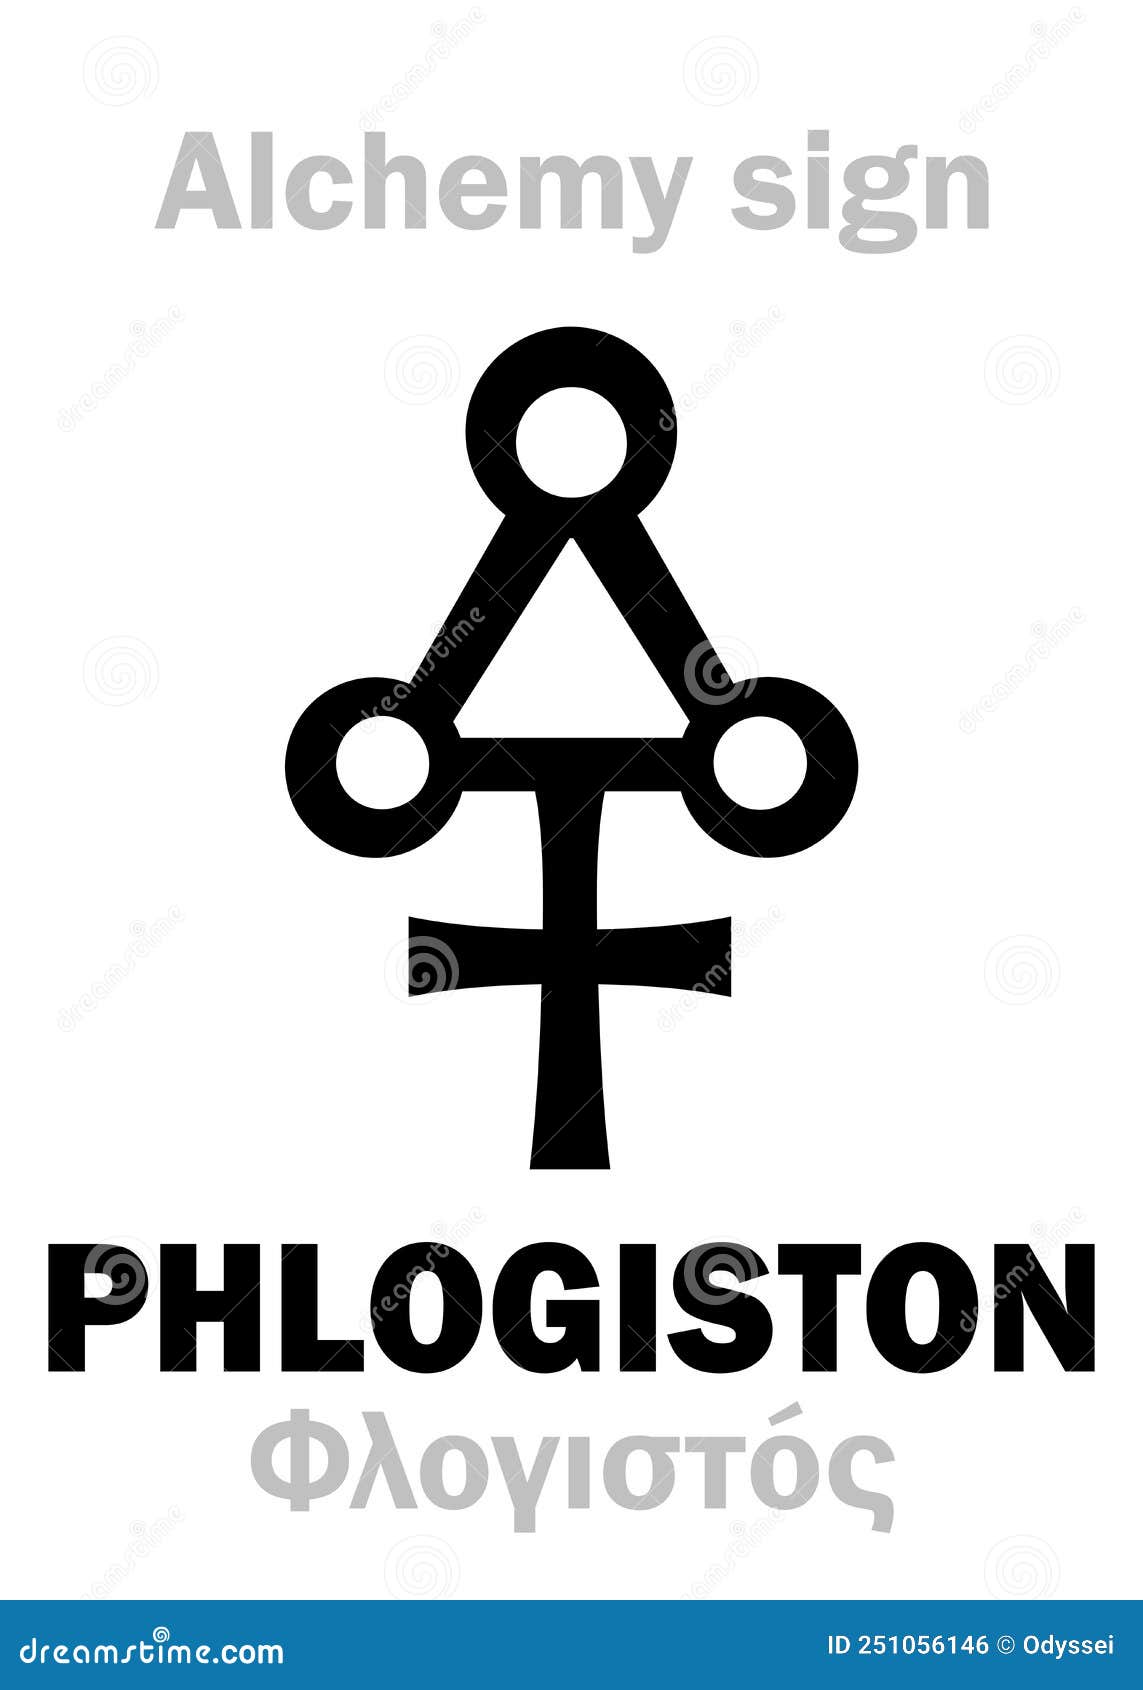 alchemy: phlogiston (ÃÂ¦ÃÂ»ÃÂ¿ÃÂ³ÃÂ¹ÃÆÃâÃÅÃâ)